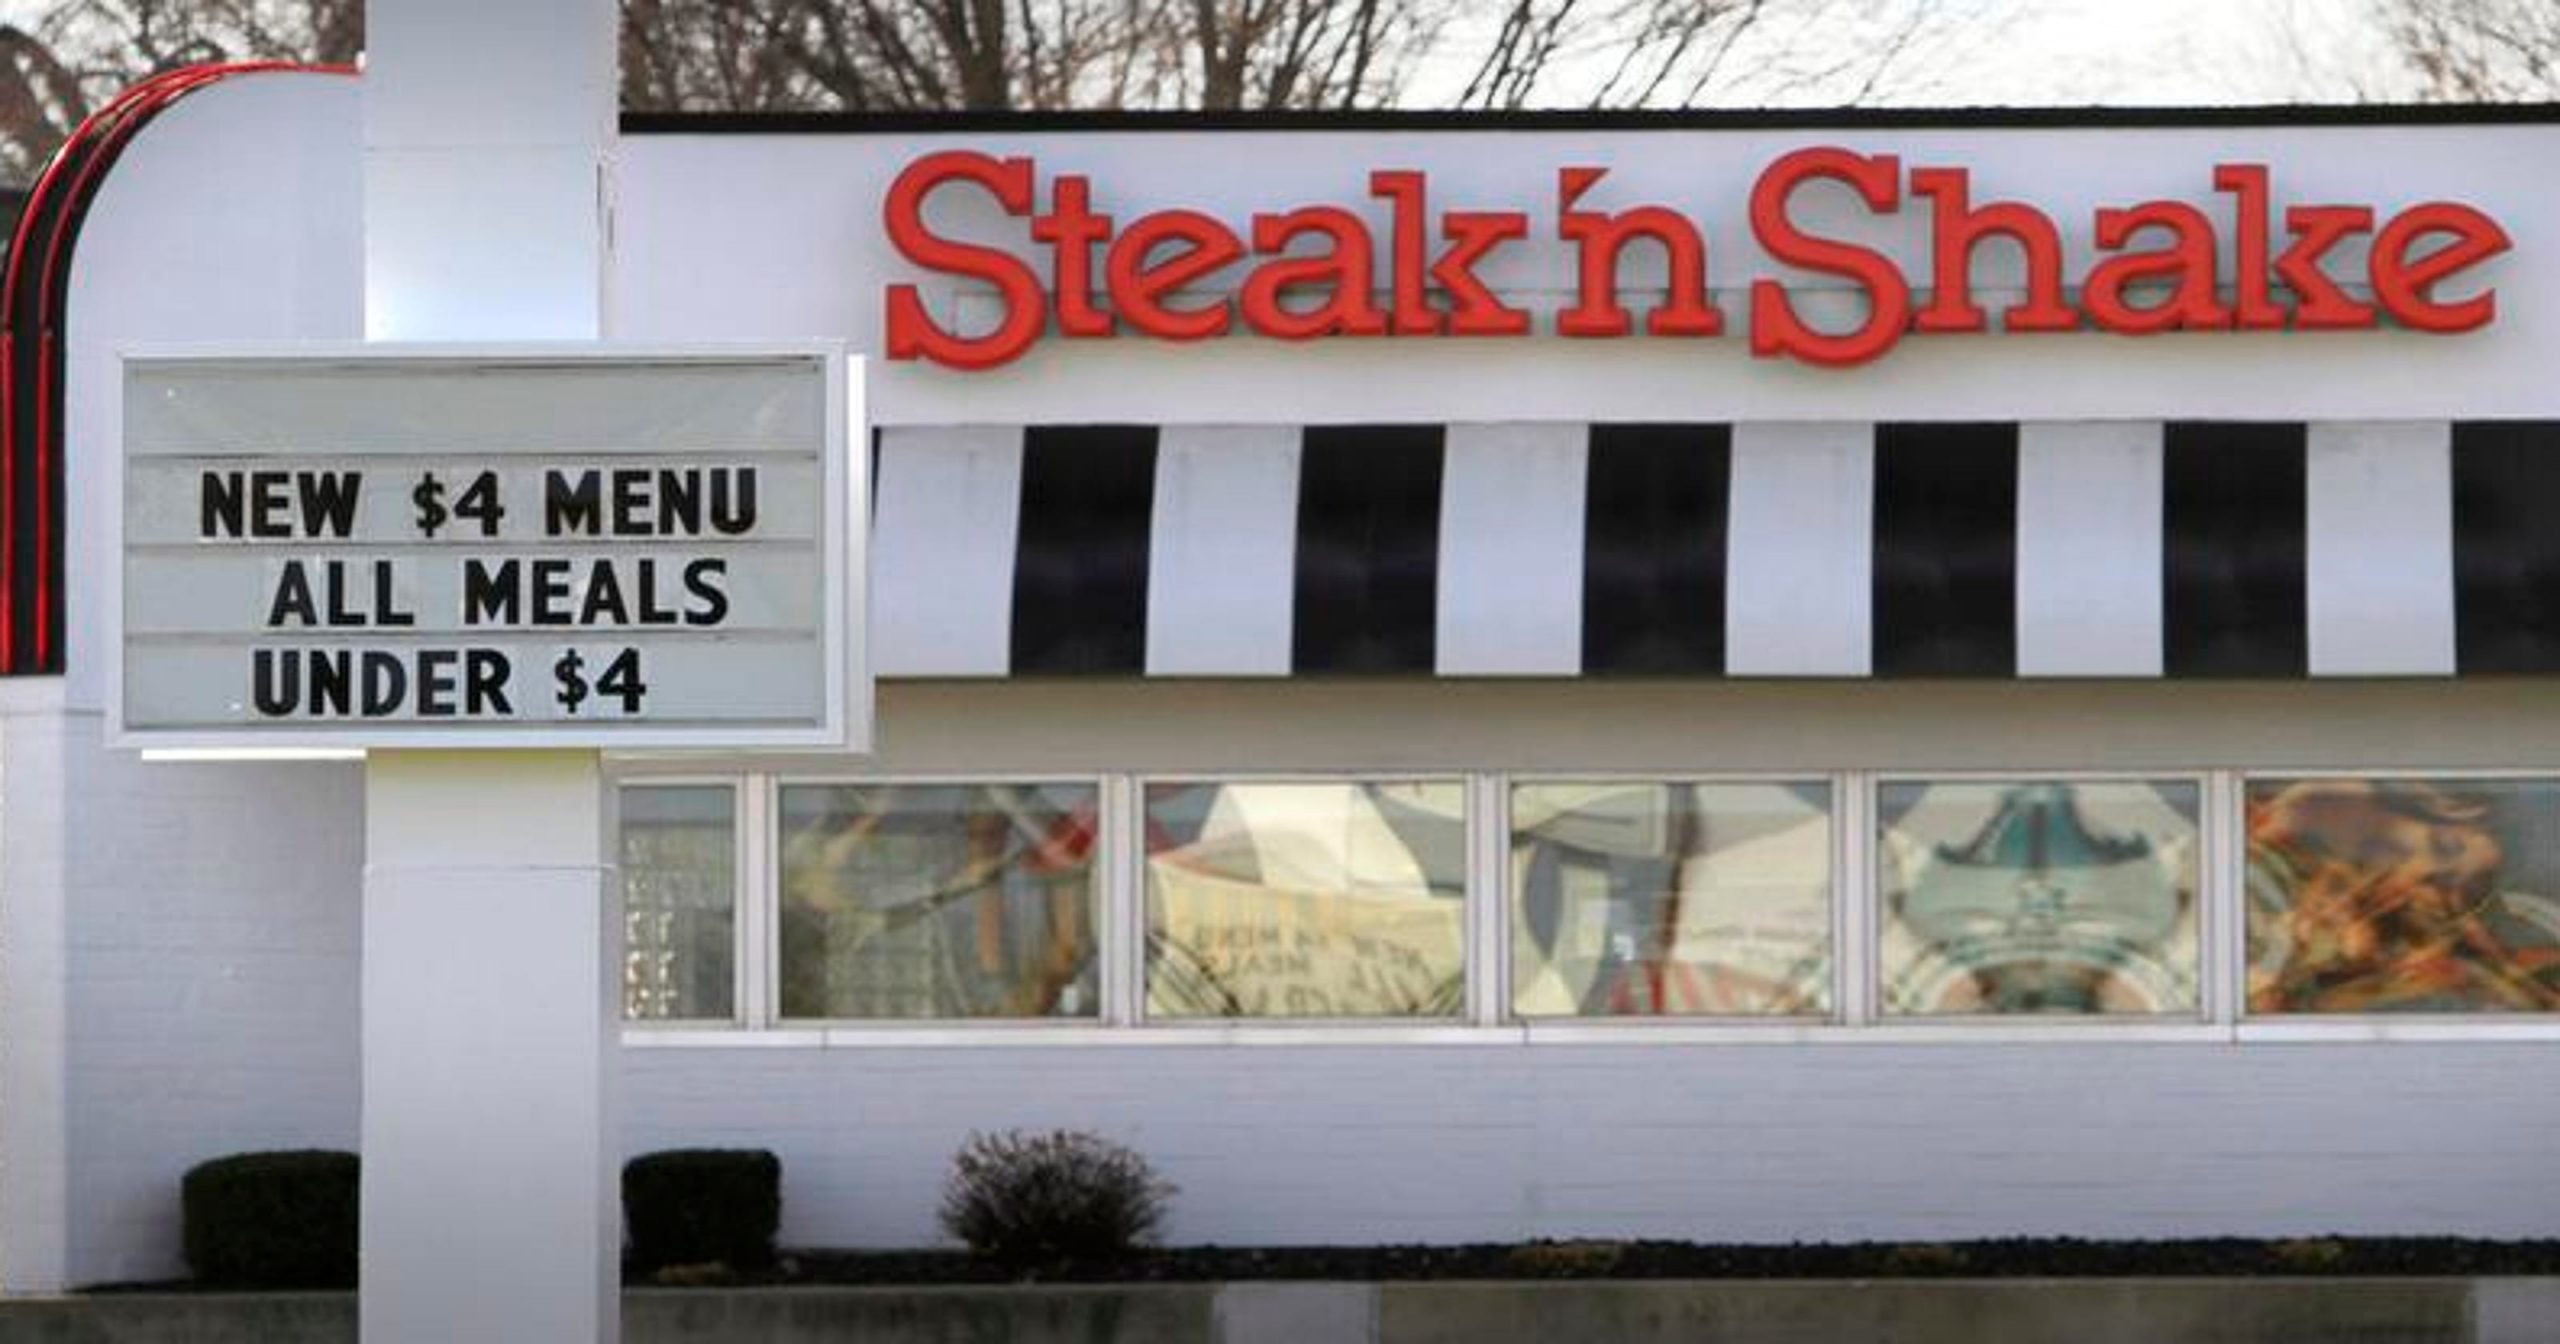 Steak n Shake franchisees bite back over $4 menu